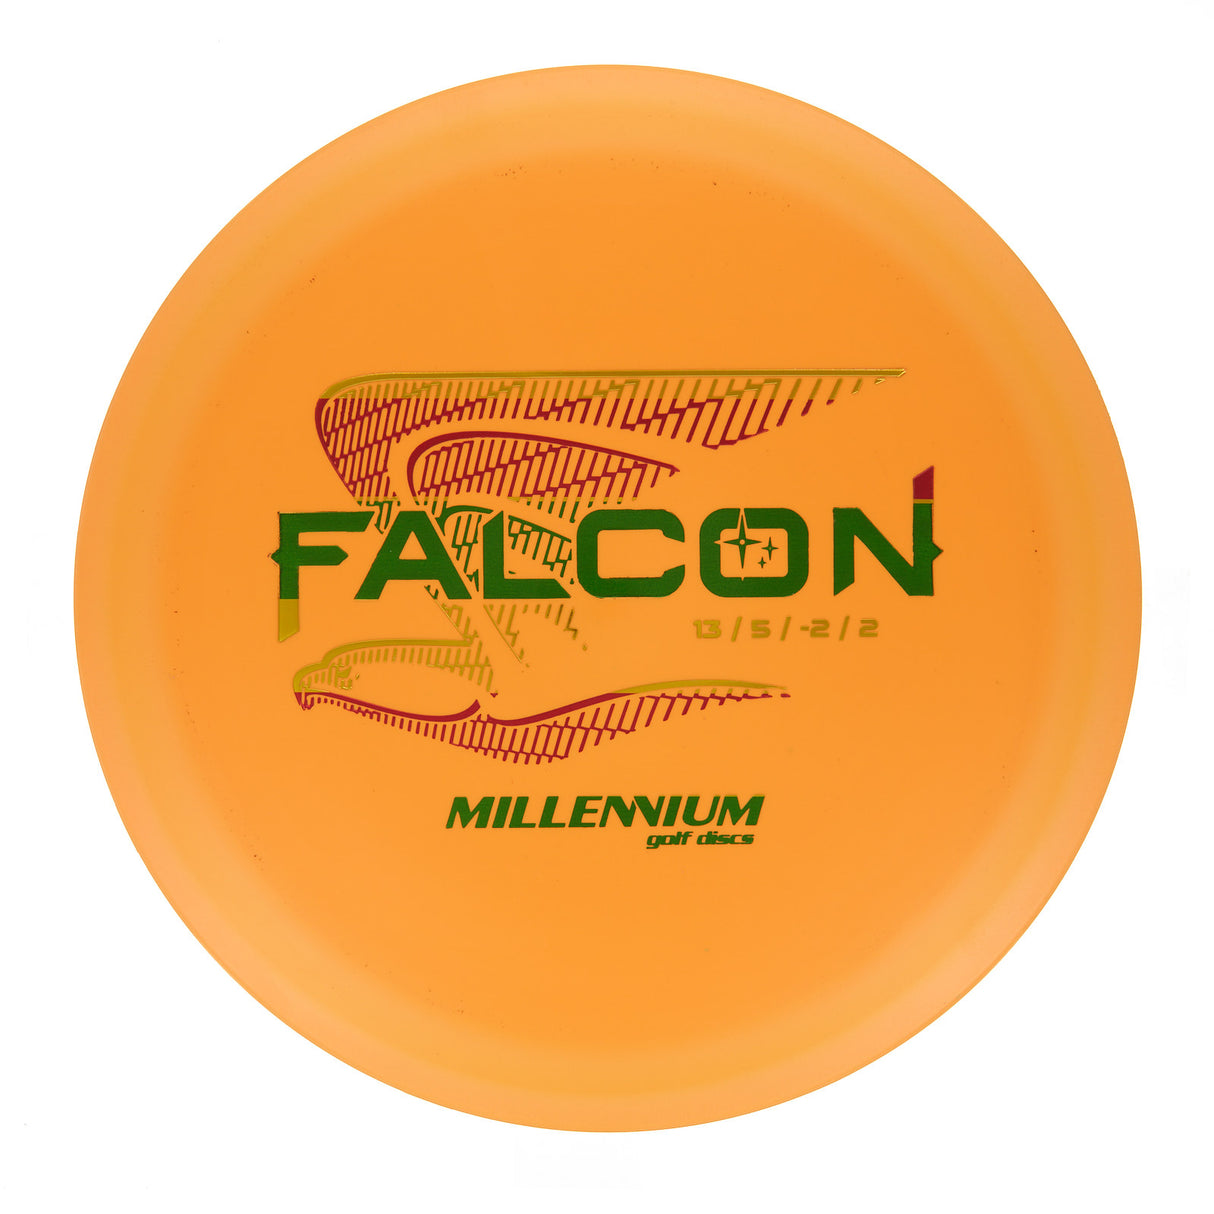 Millennium Falcon - Standard 161g | Style 0001